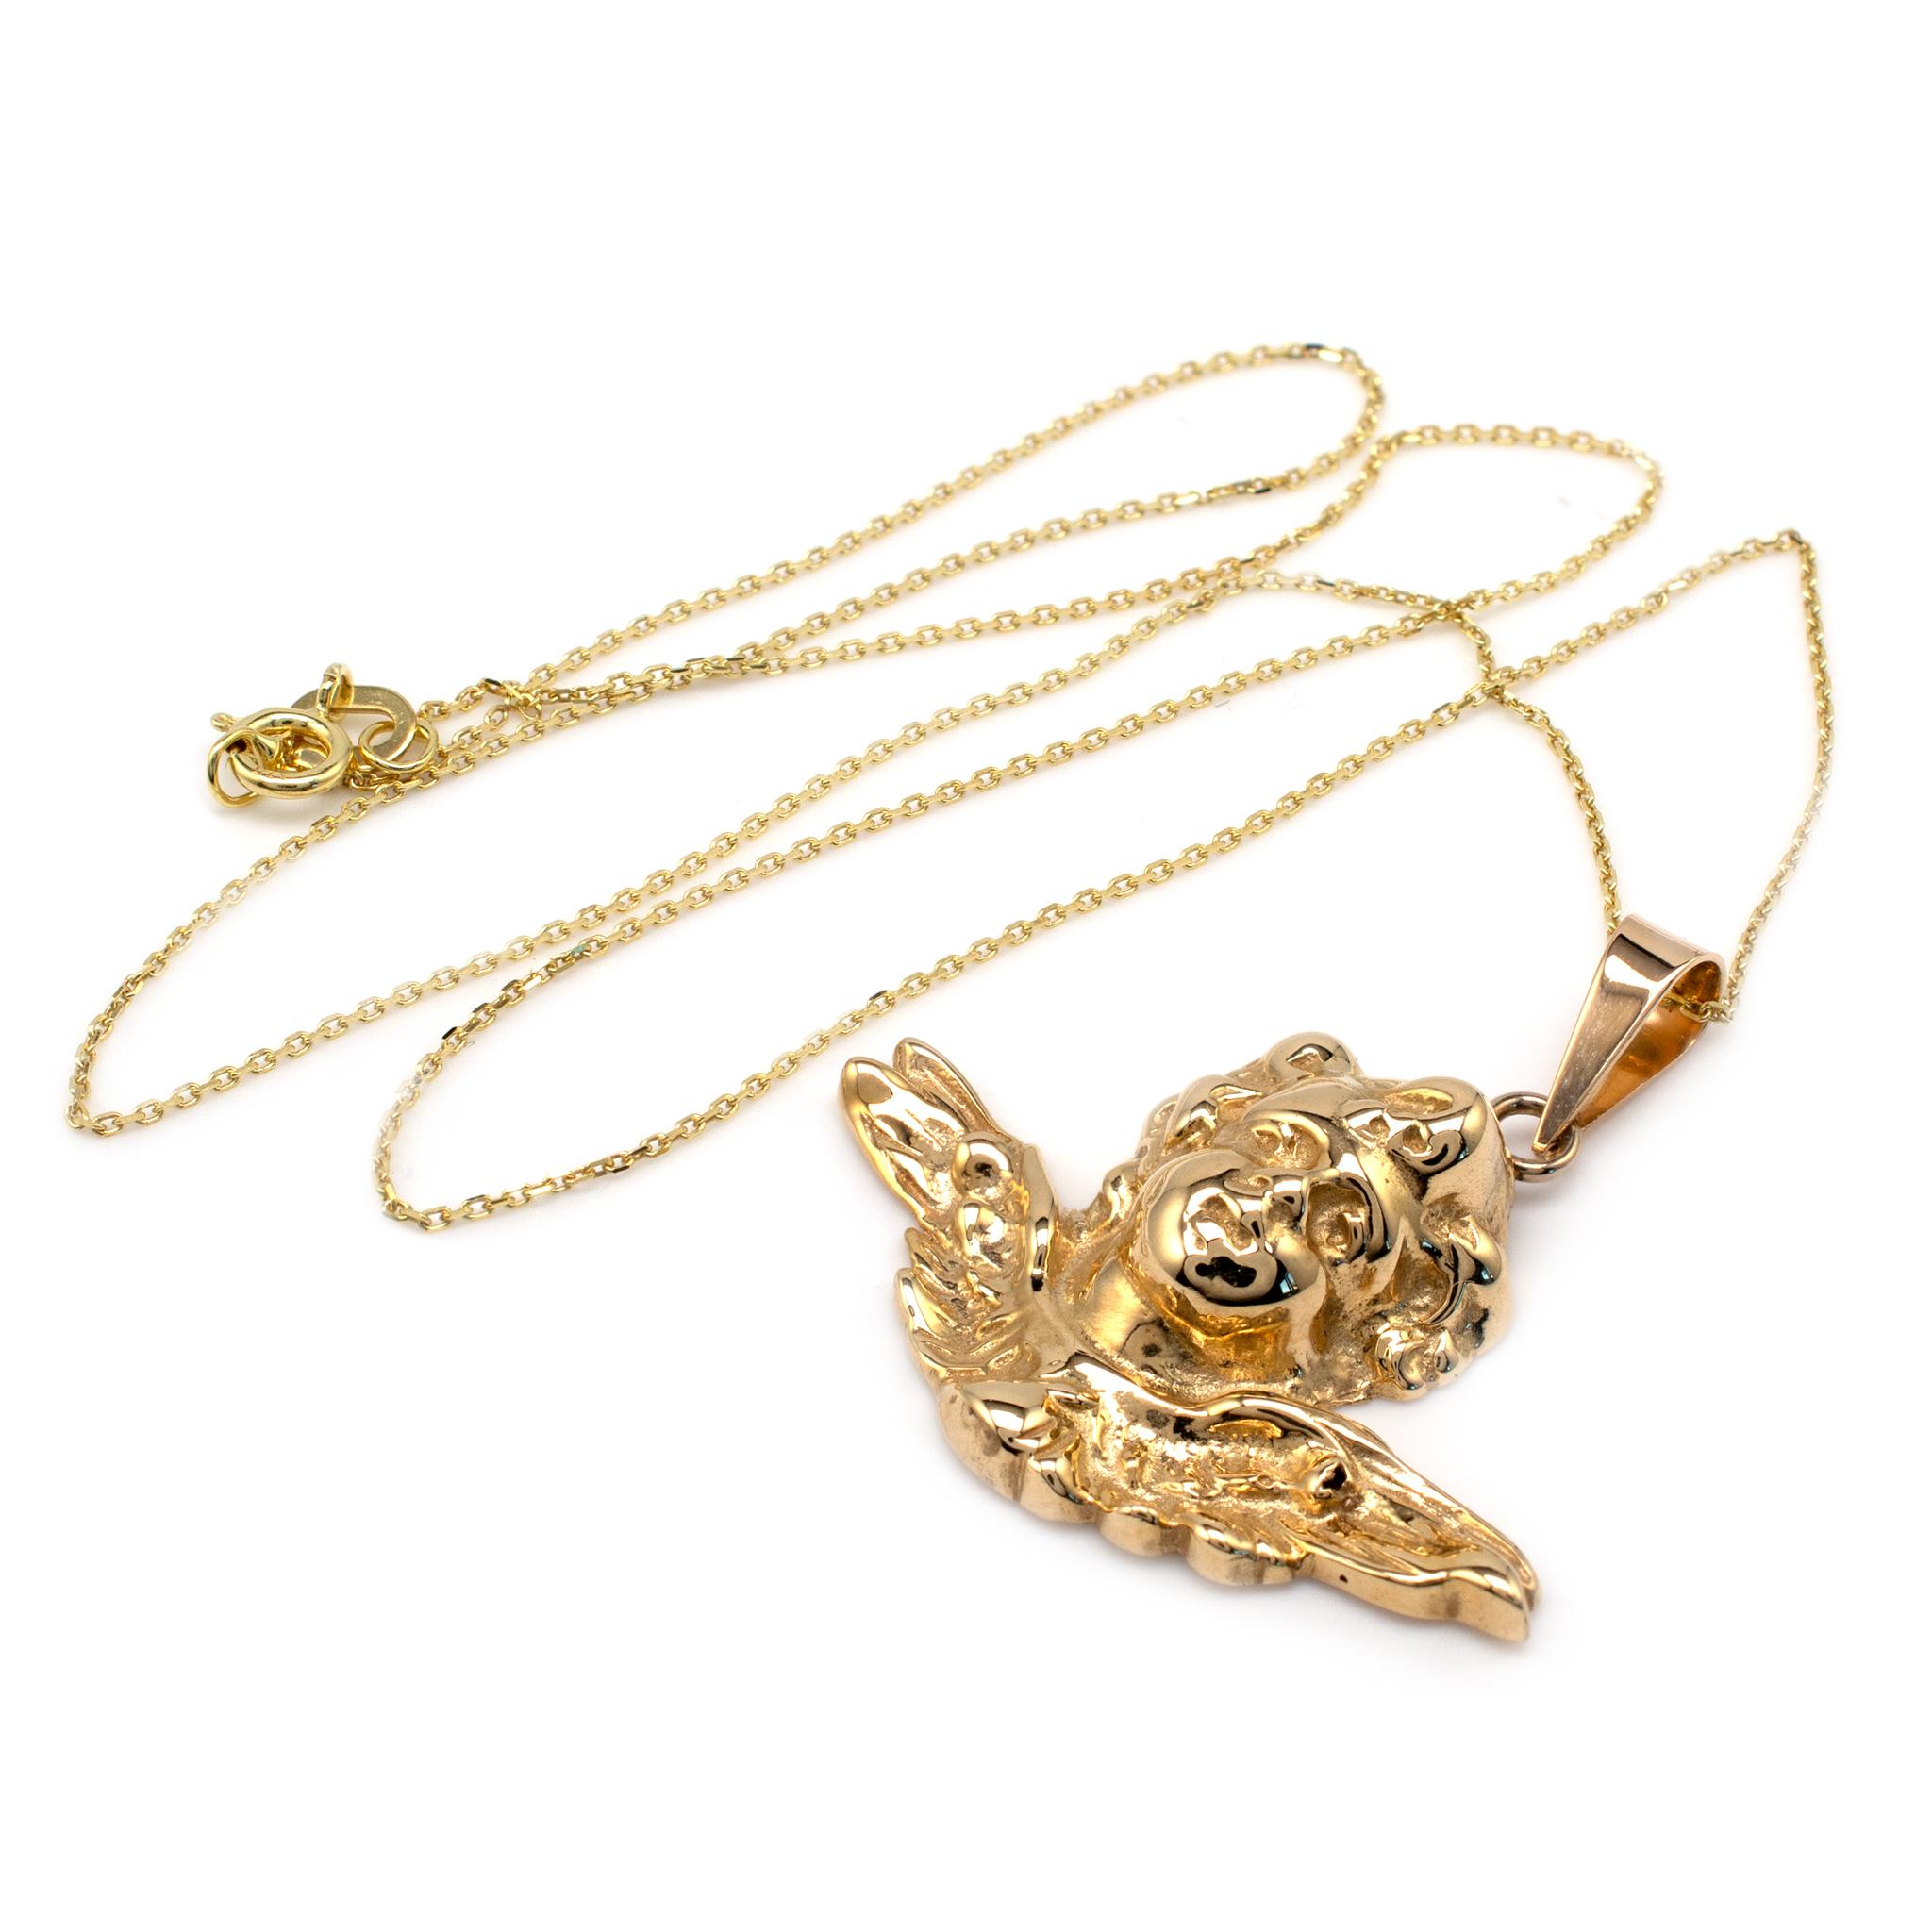 Women's Solid Gold Winged Cherub Pendant Necklace, Mythological & Religious Jewelry